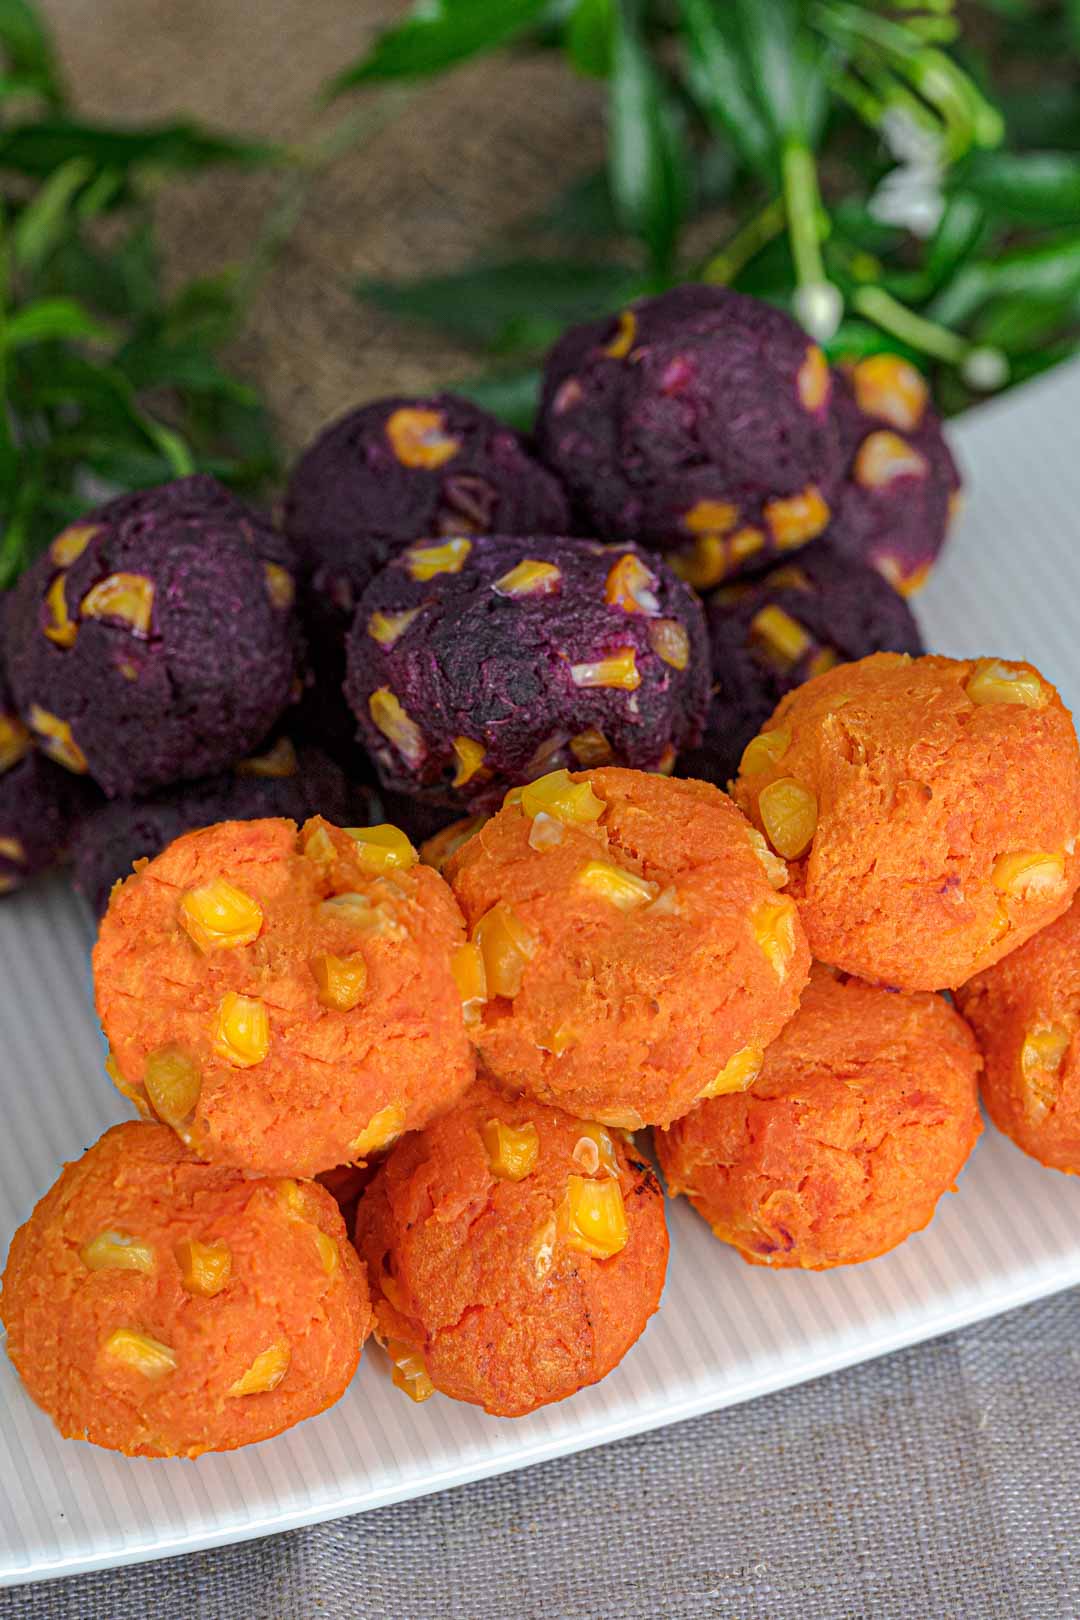 Thai sweet potato balls or khanom mantip